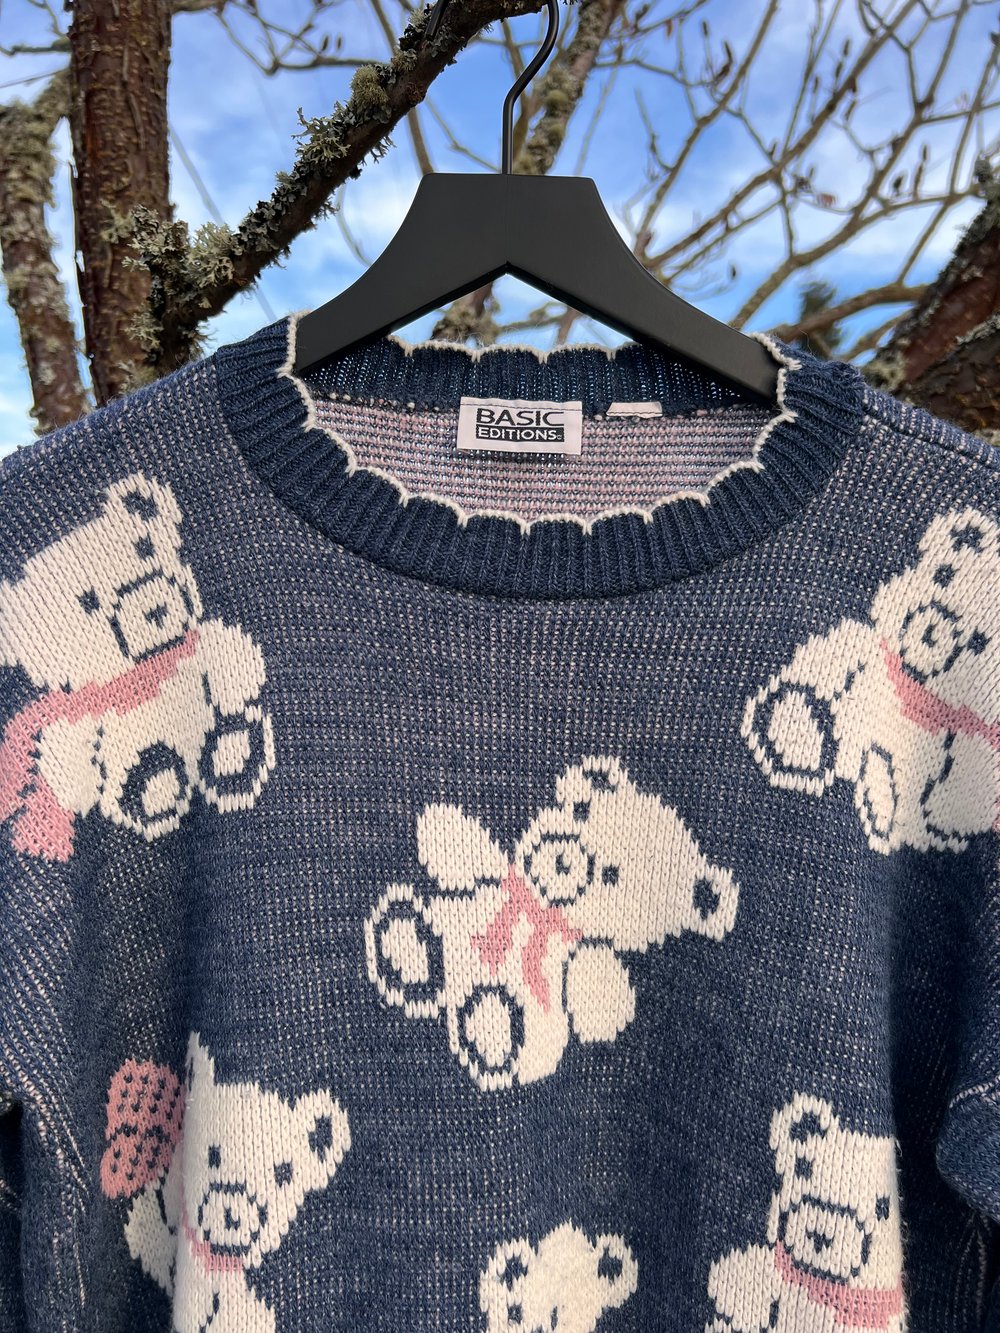 Vintage Basic Editions Teddy Bear Sweater (M)